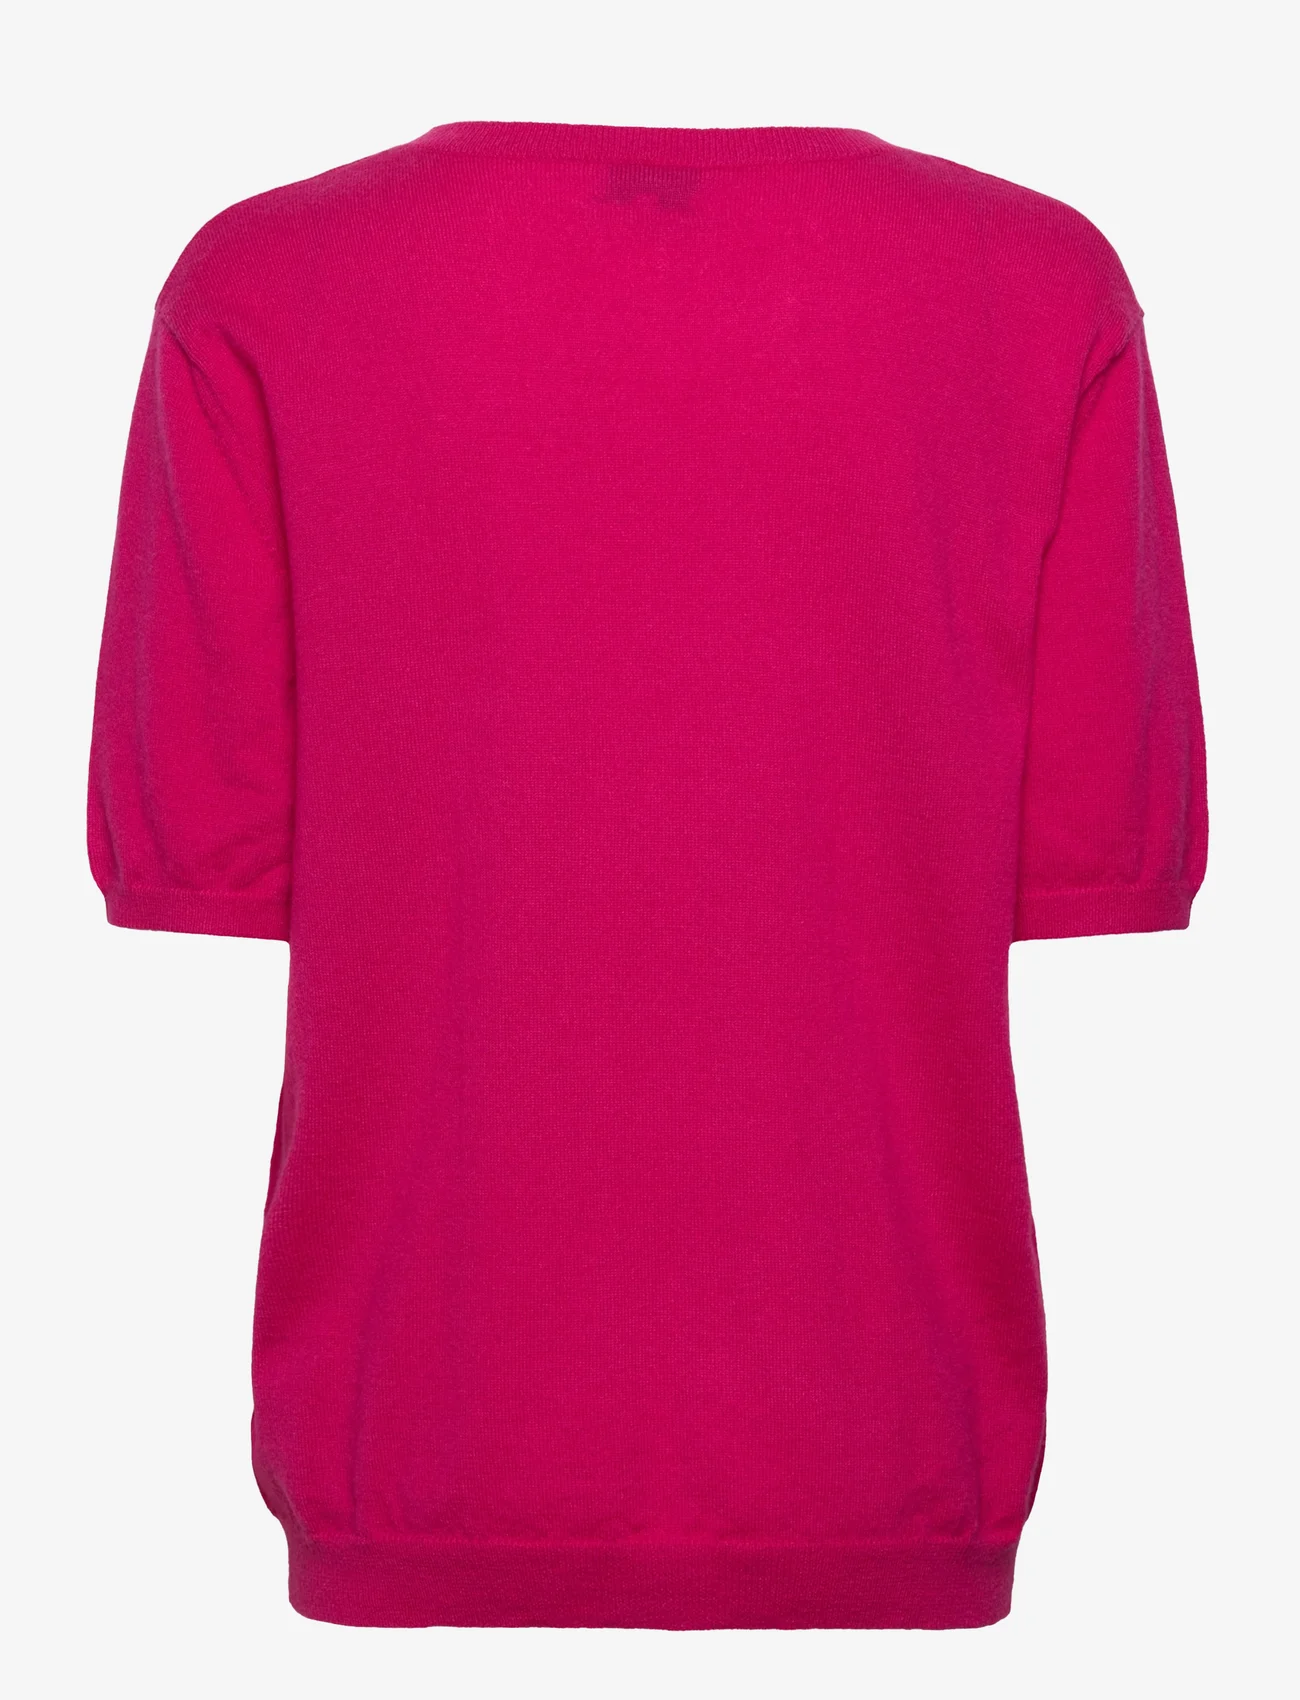 Davida Cashmere - T-shirt Oversized - džemprid - fuchsia - 1